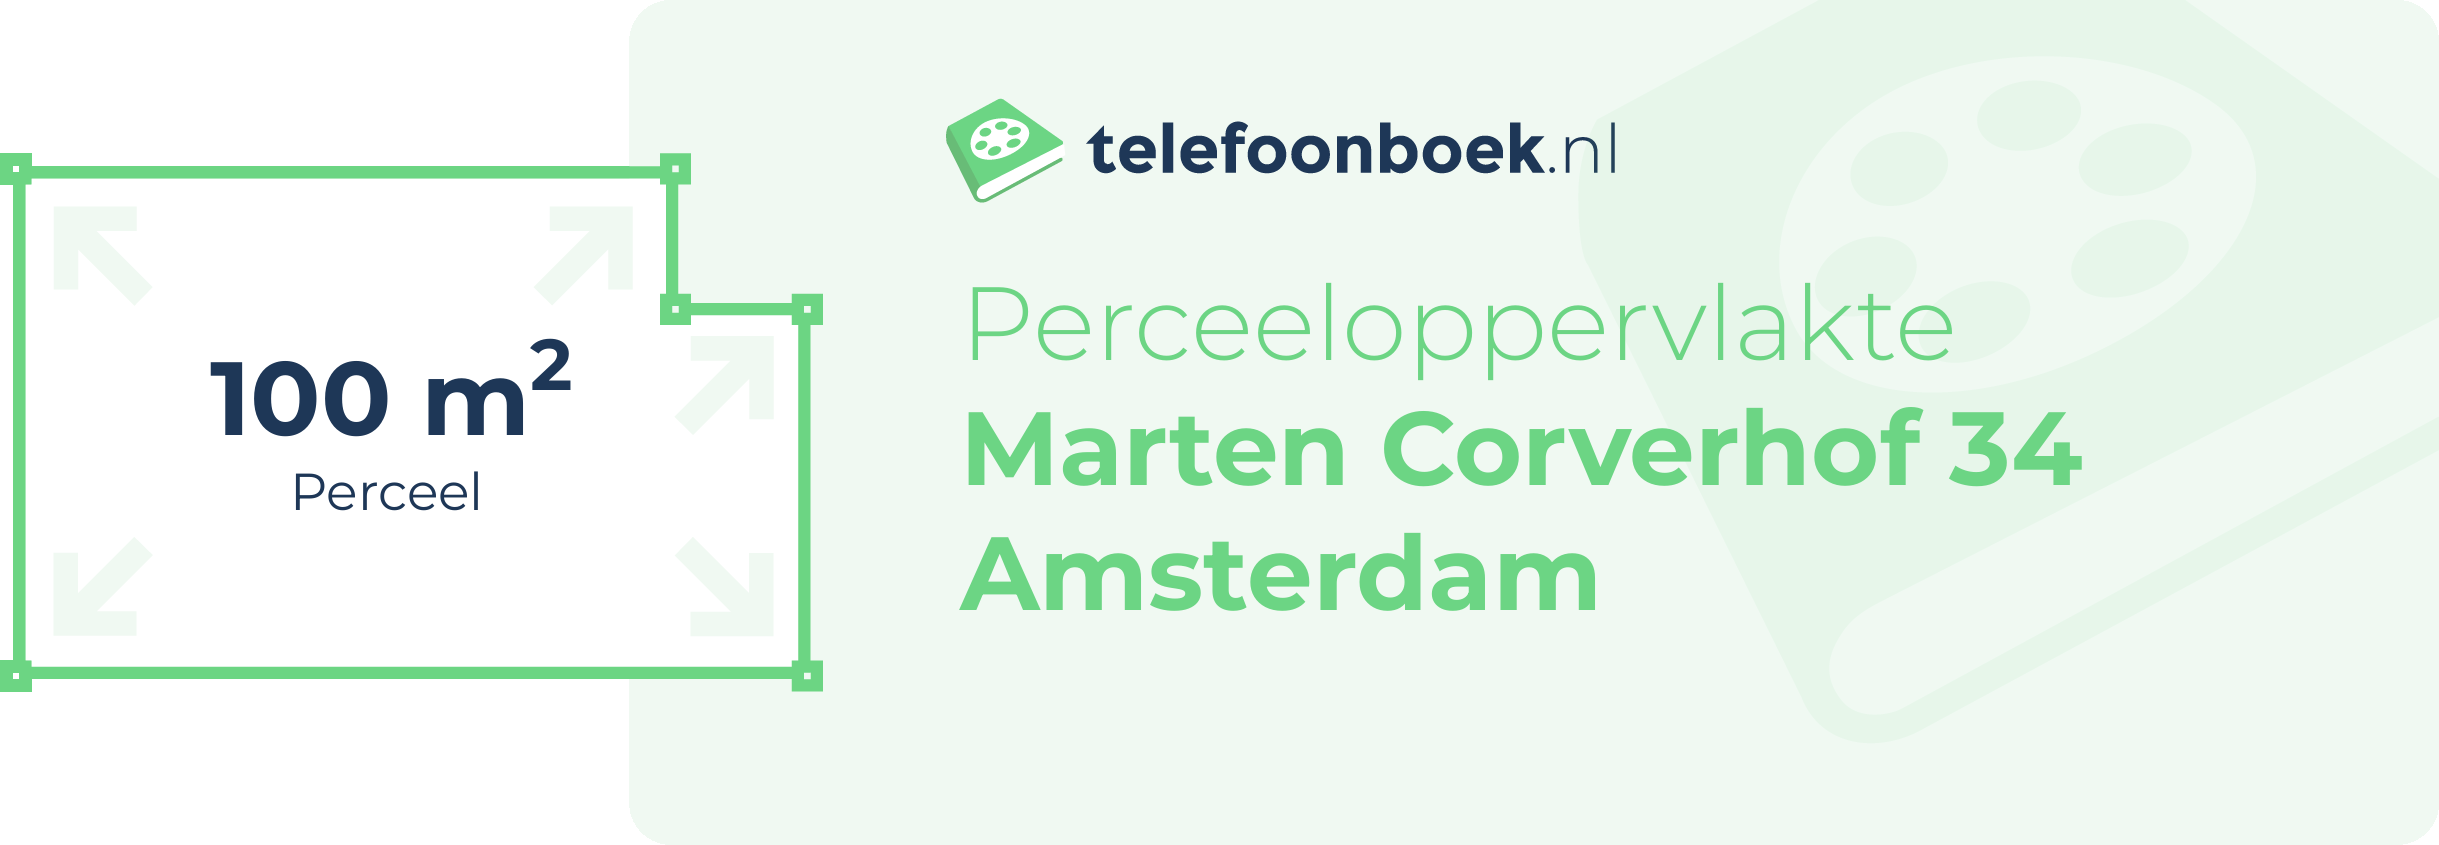 Perceeloppervlakte Marten Corverhof 34 Amsterdam